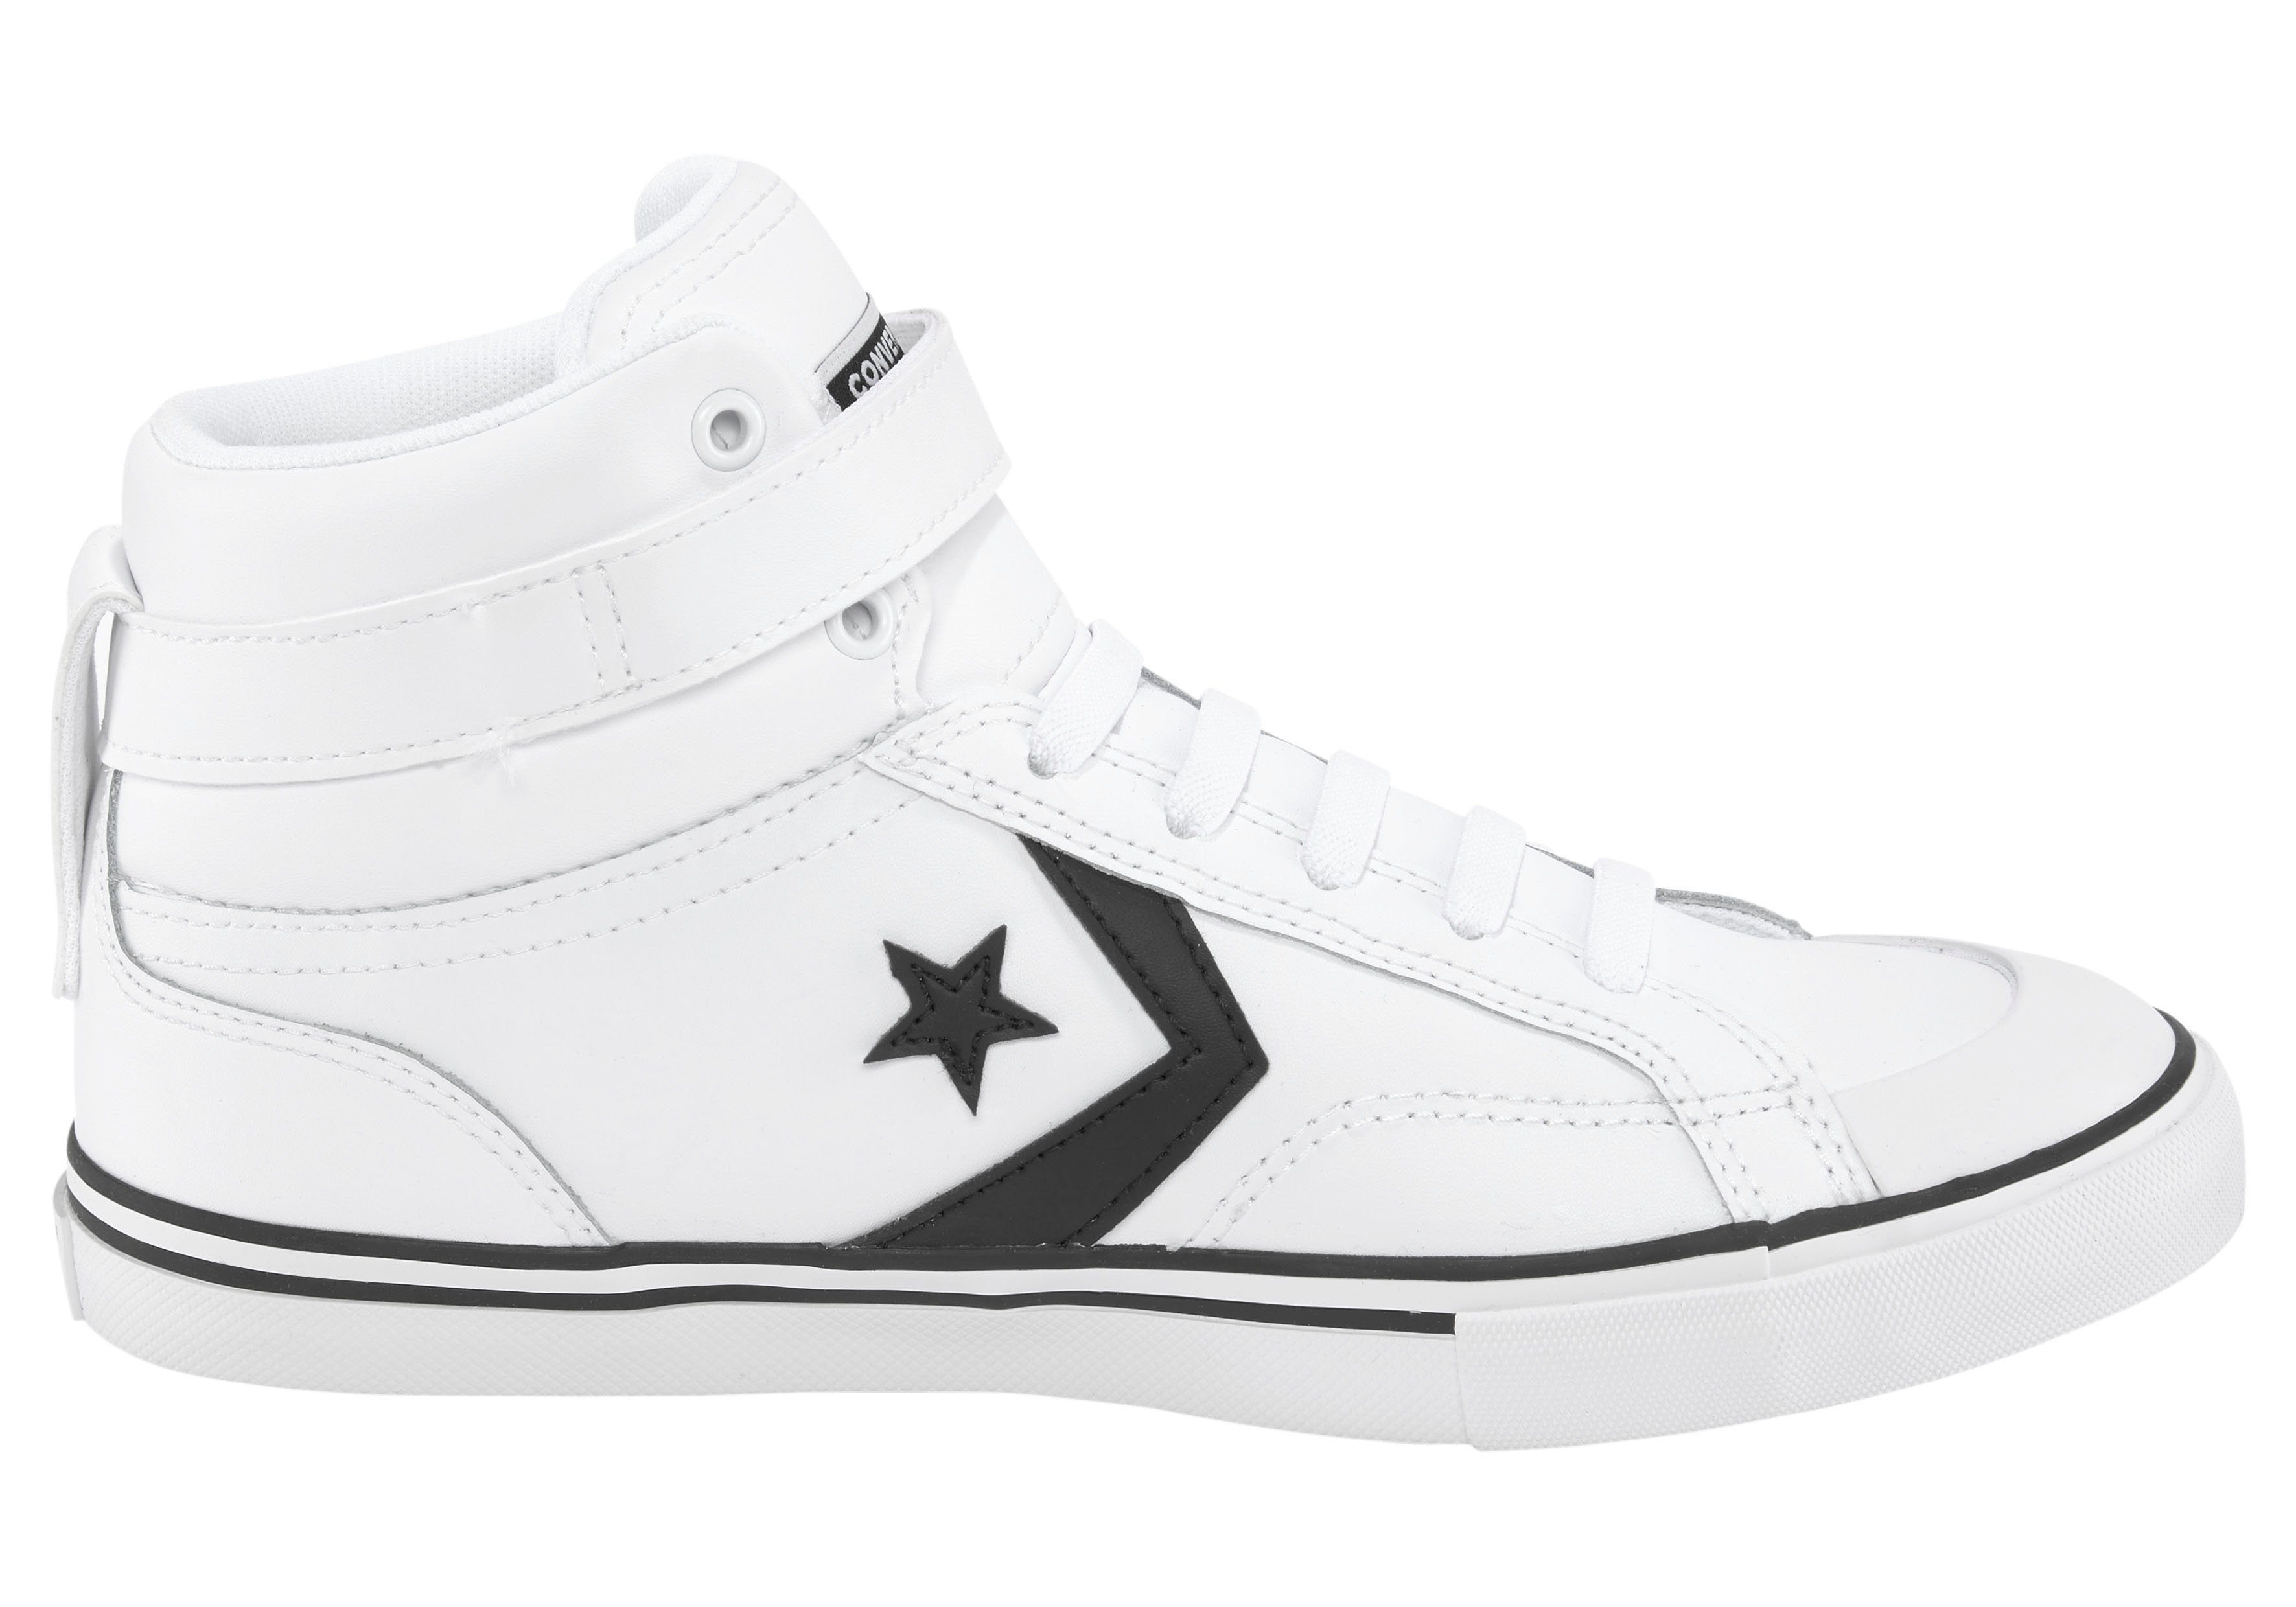 LEATHER BLAZE PRO Converse weiß-schwarz Sneaker STRAP